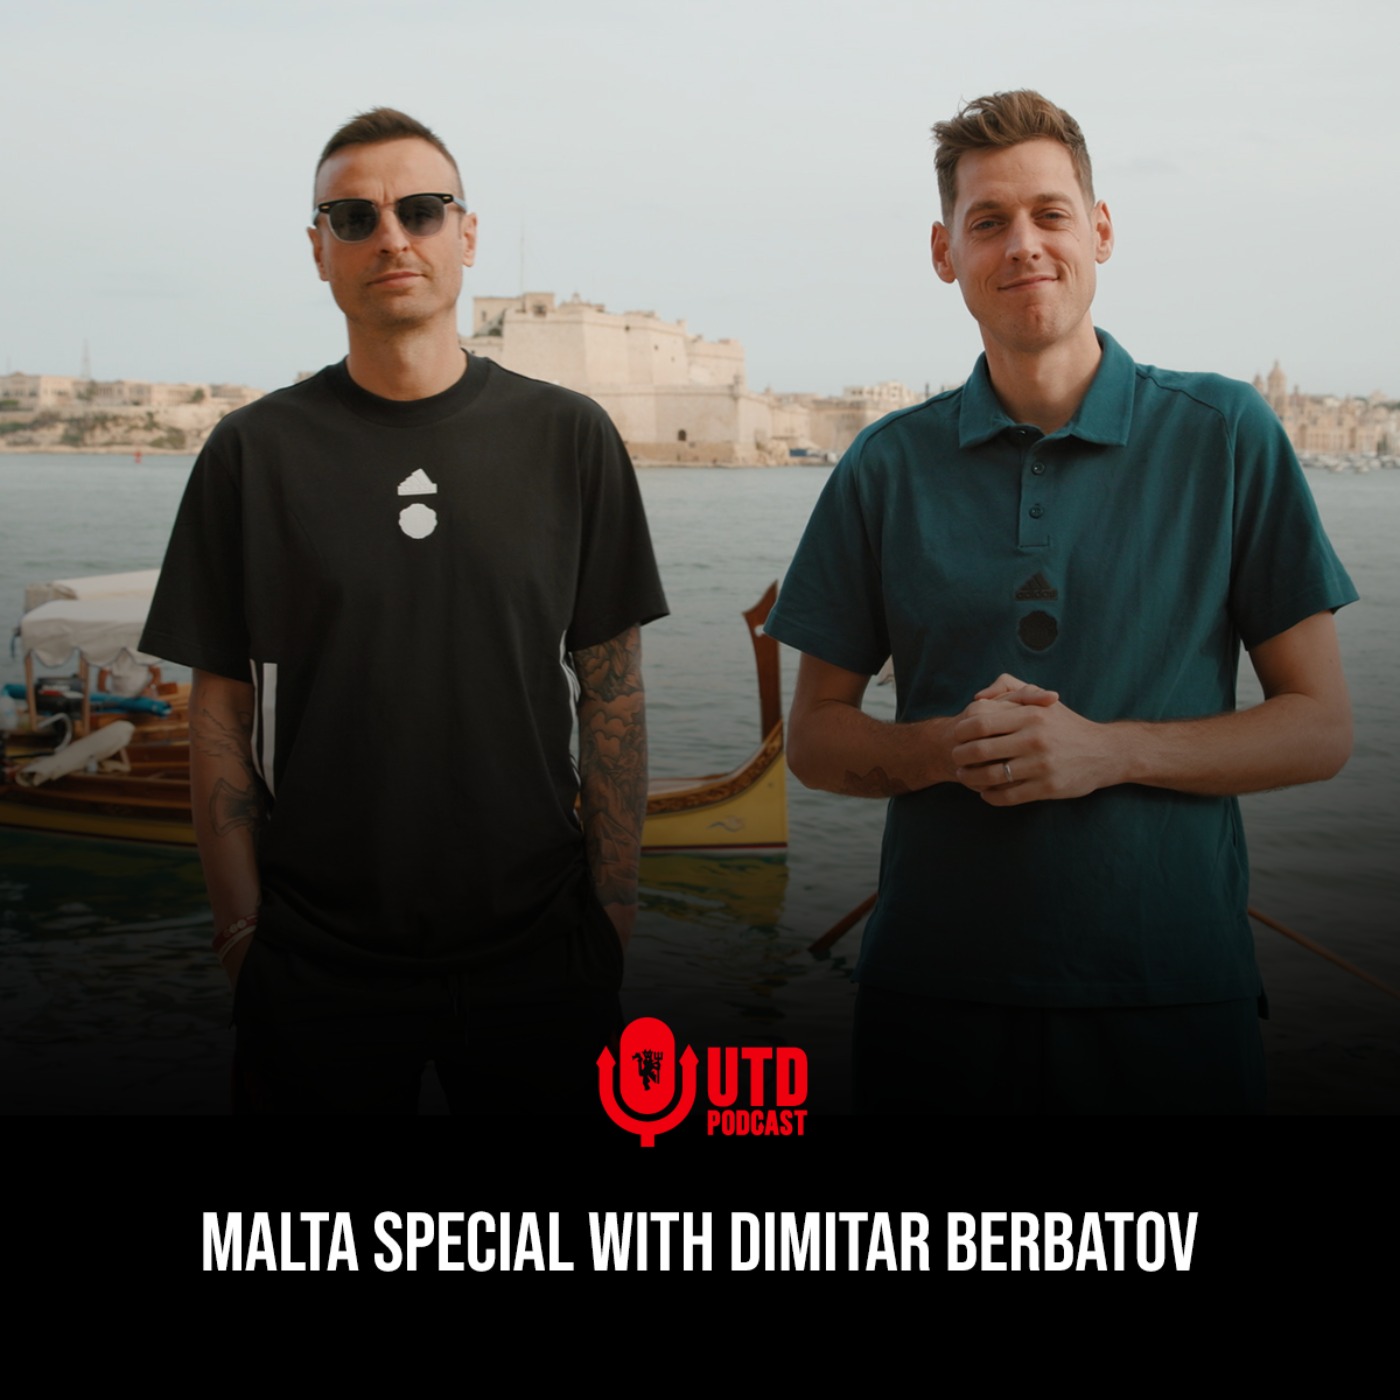 Malta special with Dimitar Berbatov